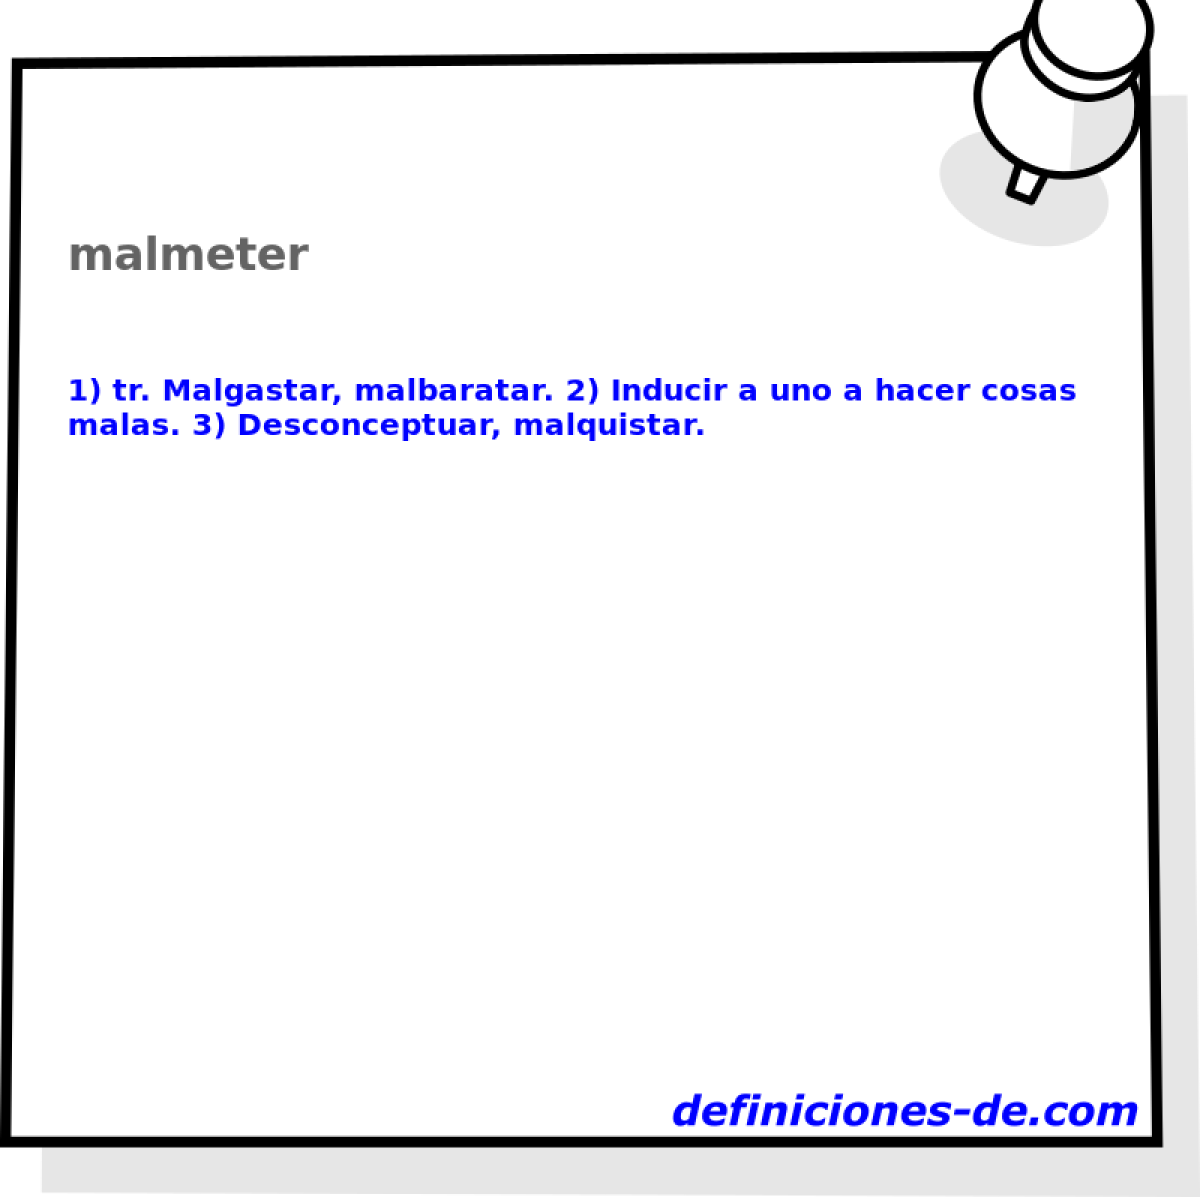 malmeter 